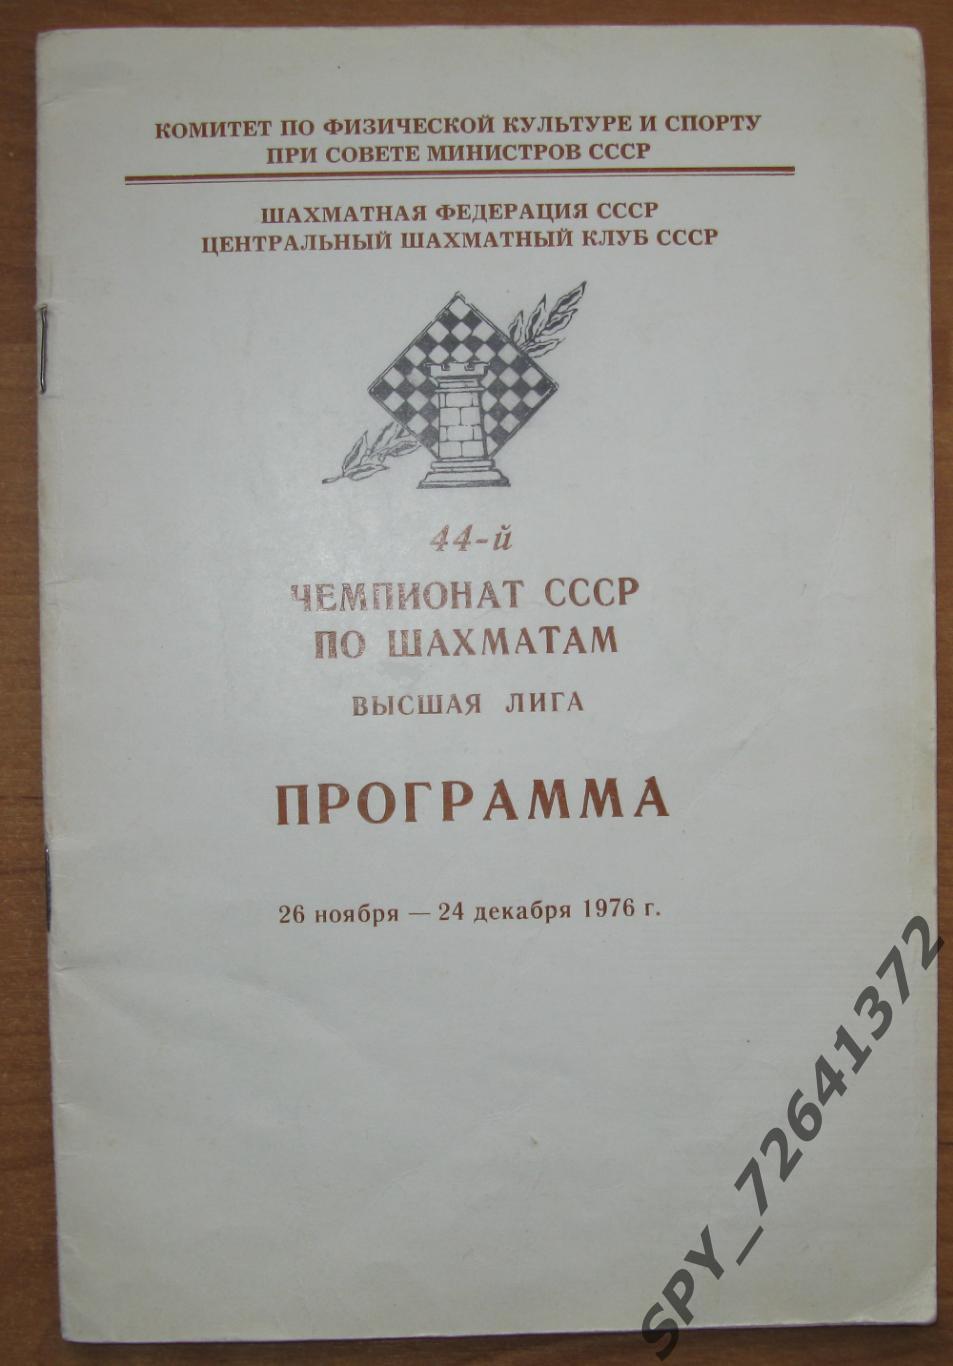 Программа. 44-й чемпионат СССР по шахматам.